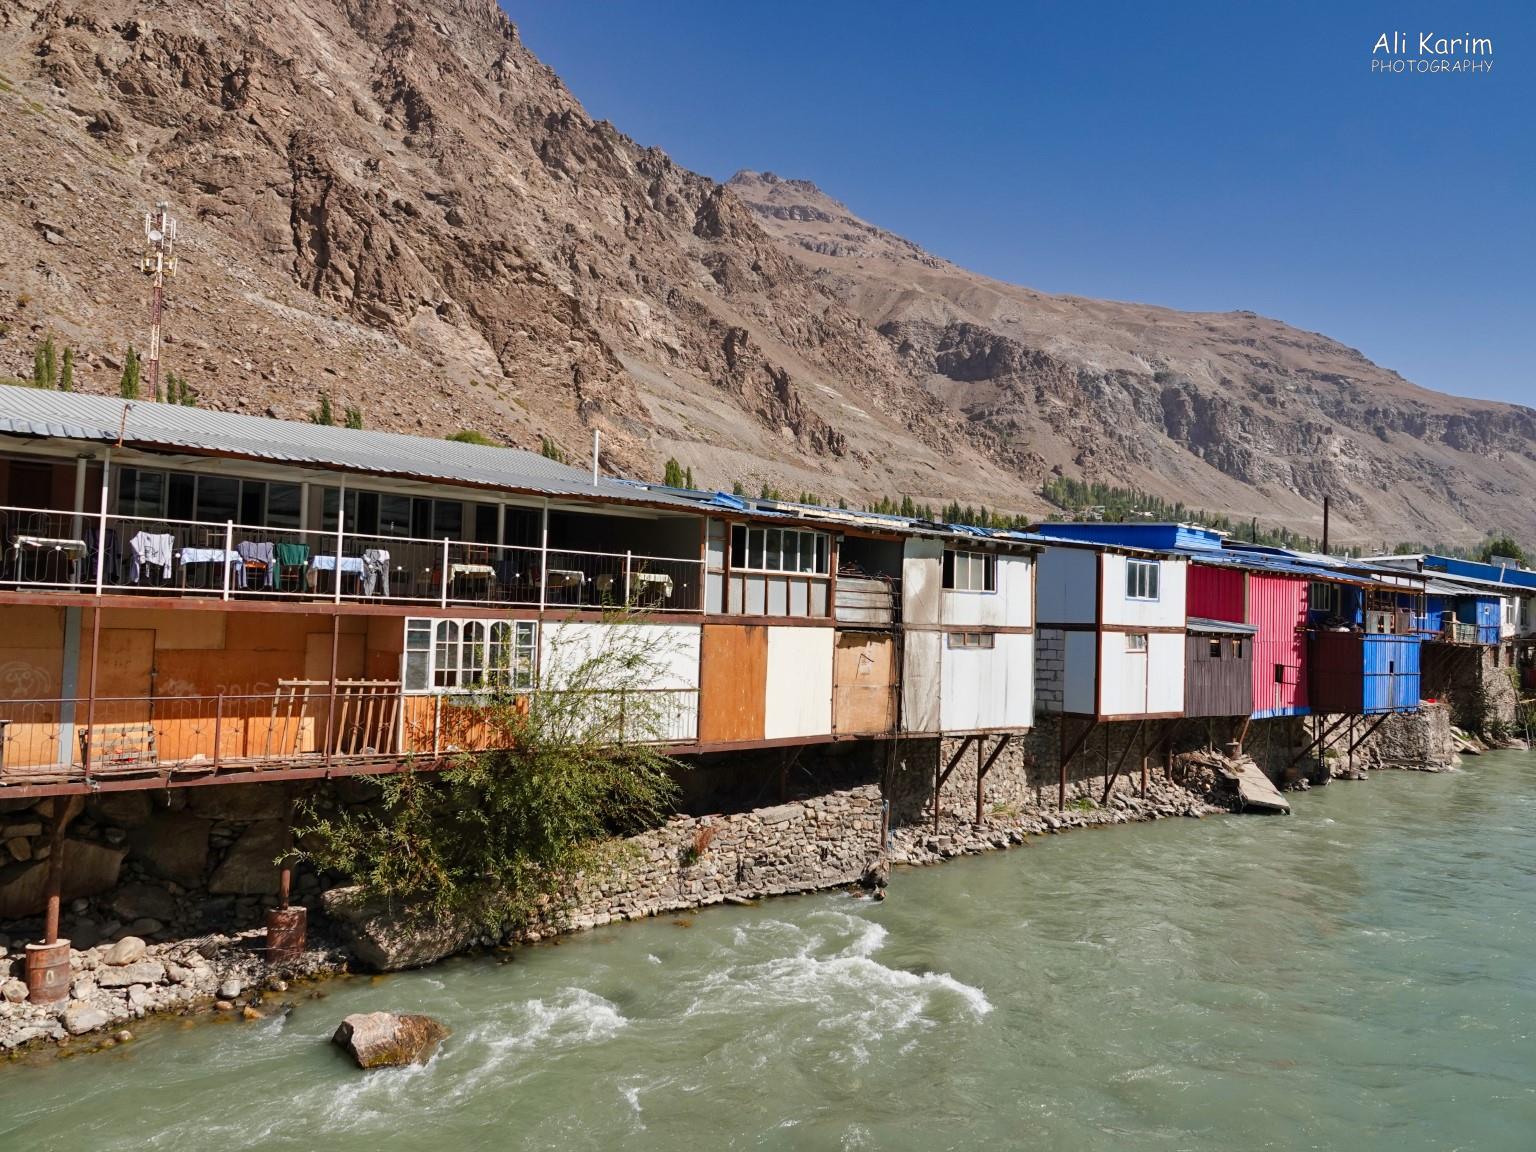 More Khorog, Tajikistan Houses along the river Gunt